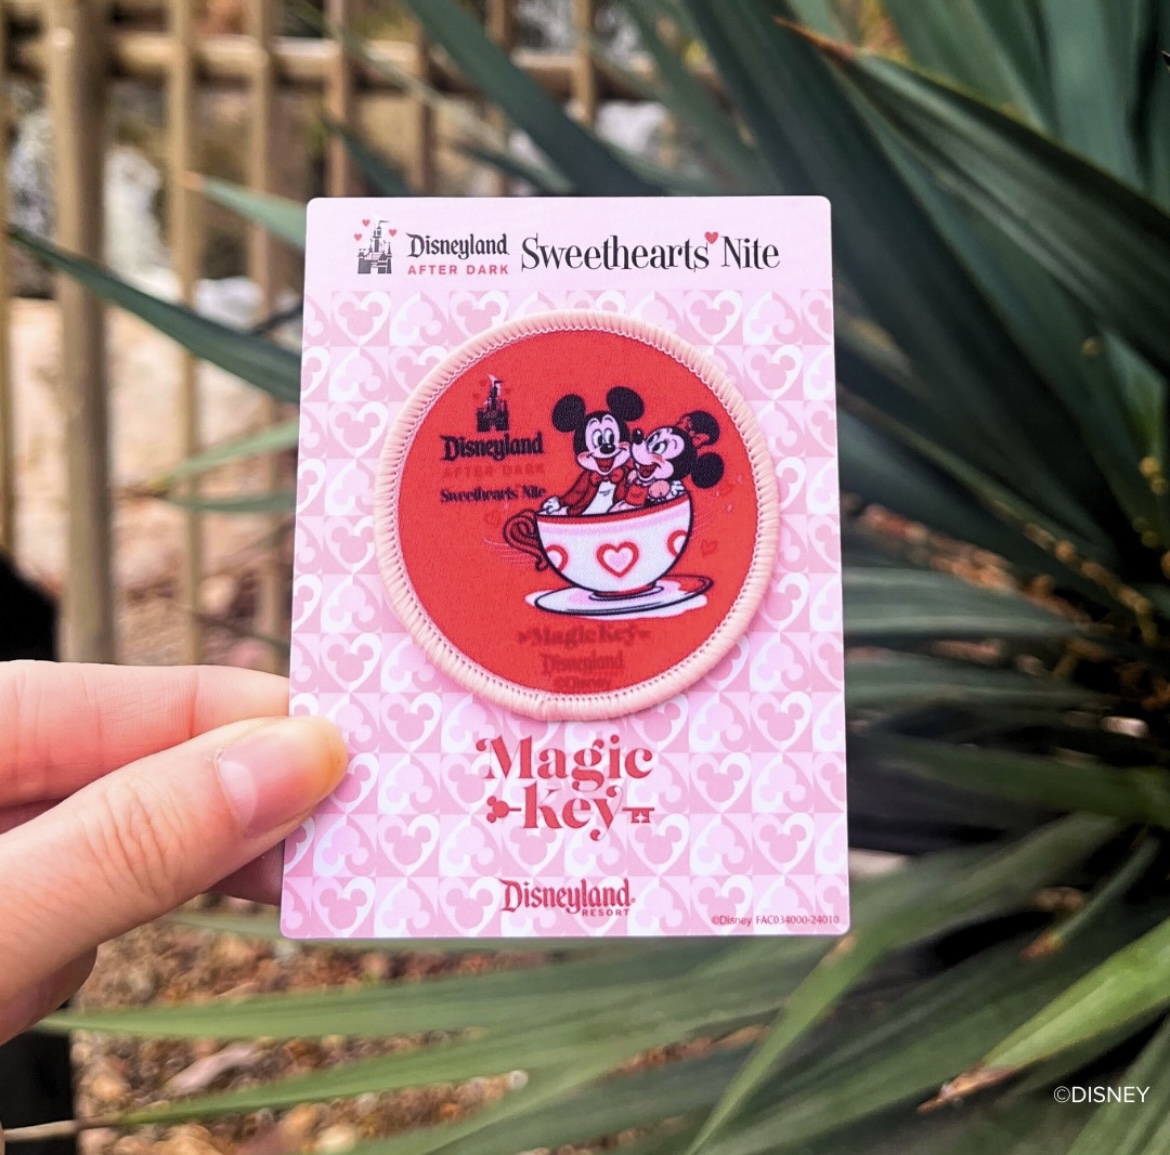 Disneyland After Dark Sweethearts' Nite Magic Key Exclusive Patch